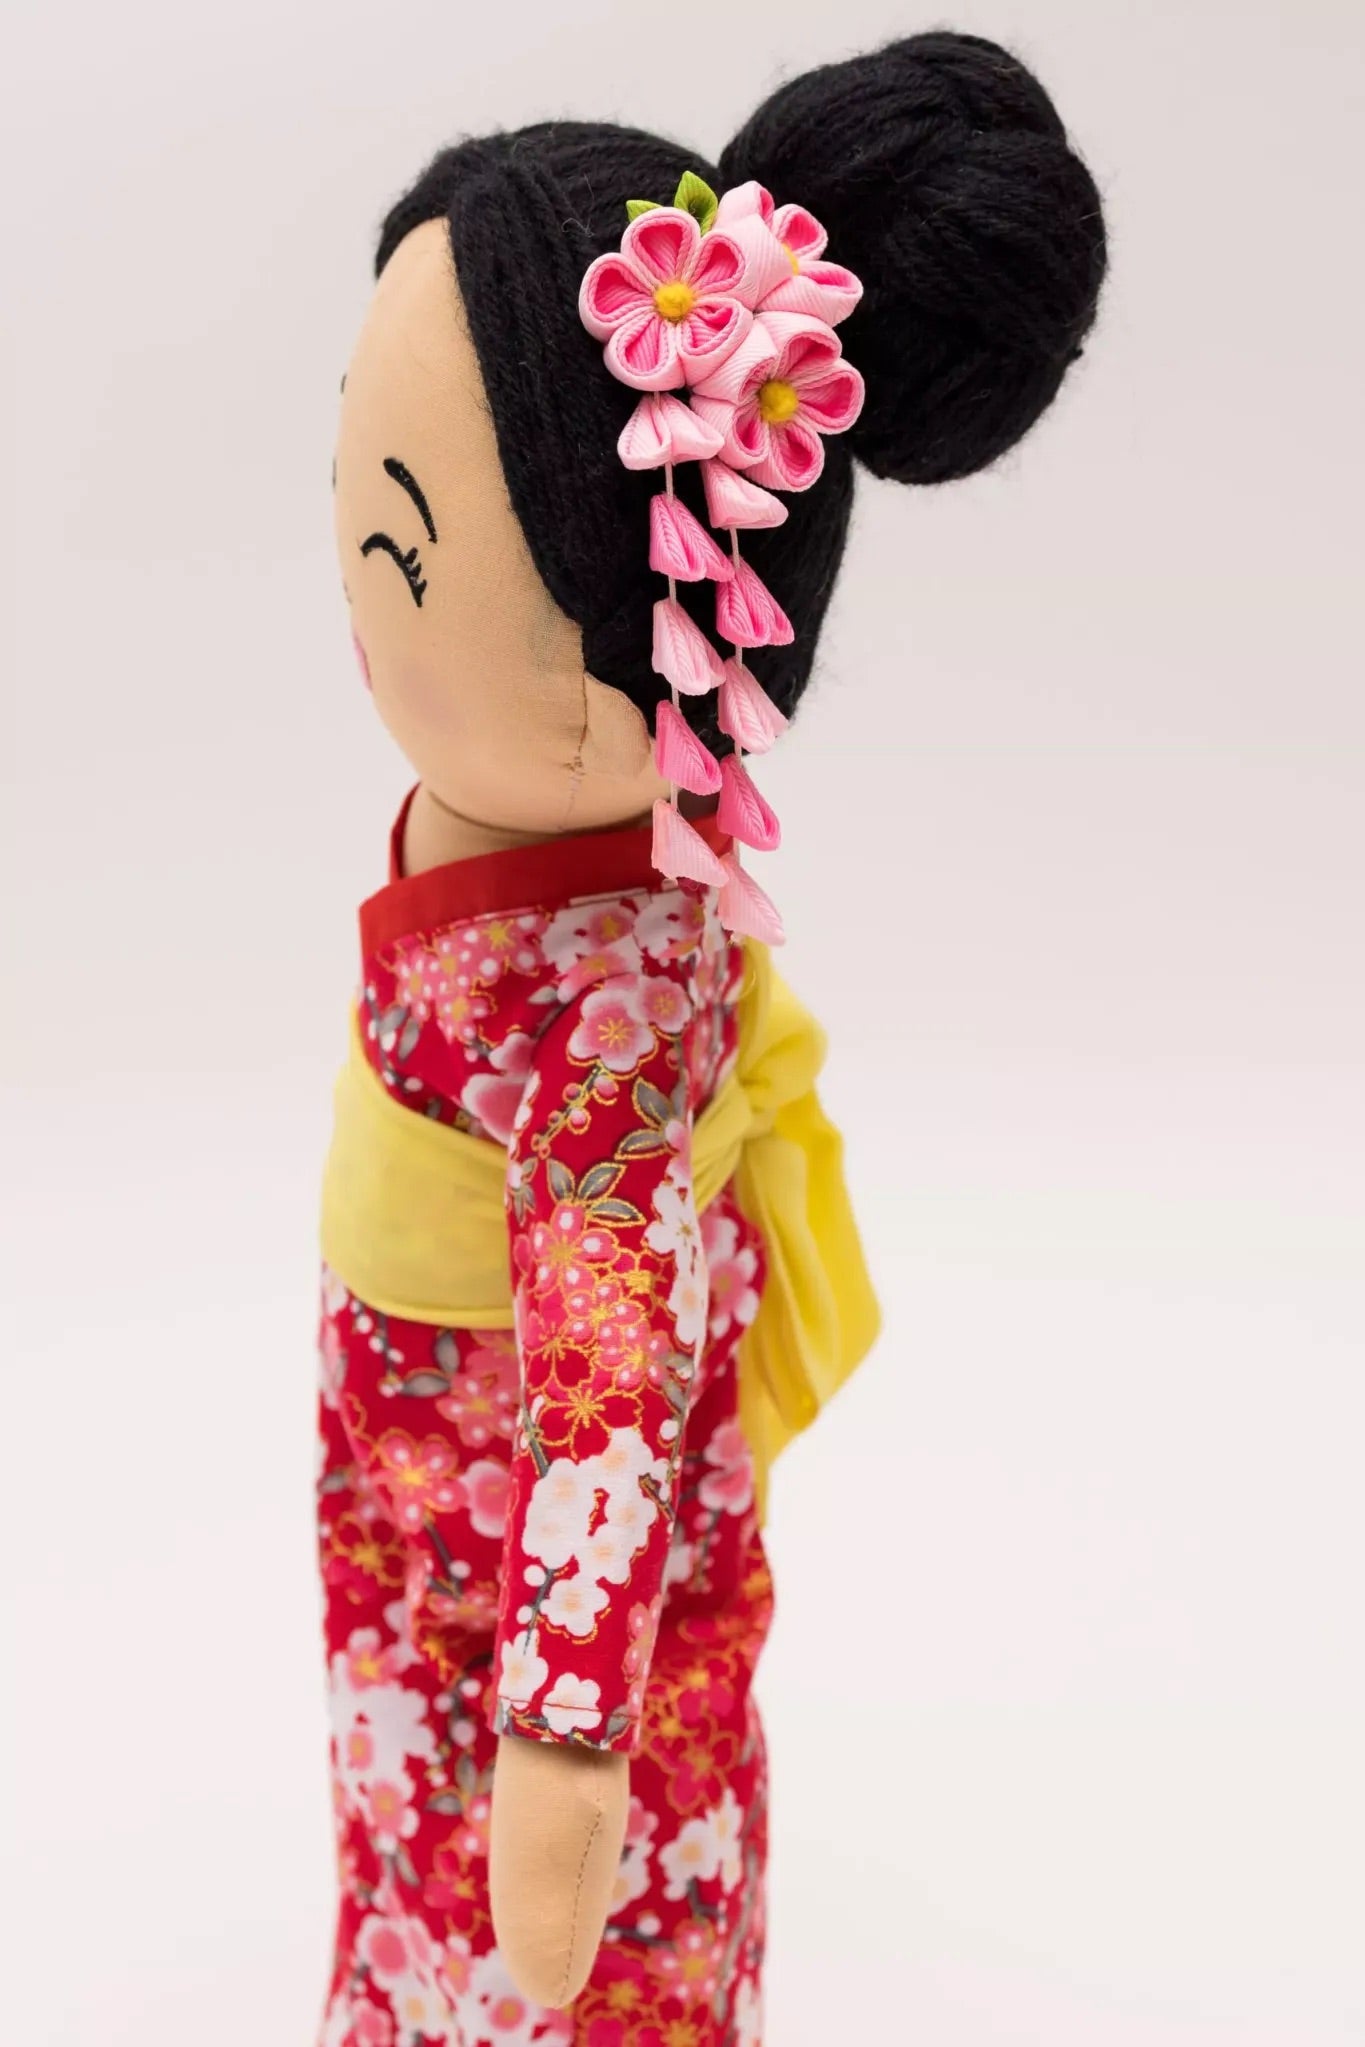 Japanese 'Aiko' Cultural Doll